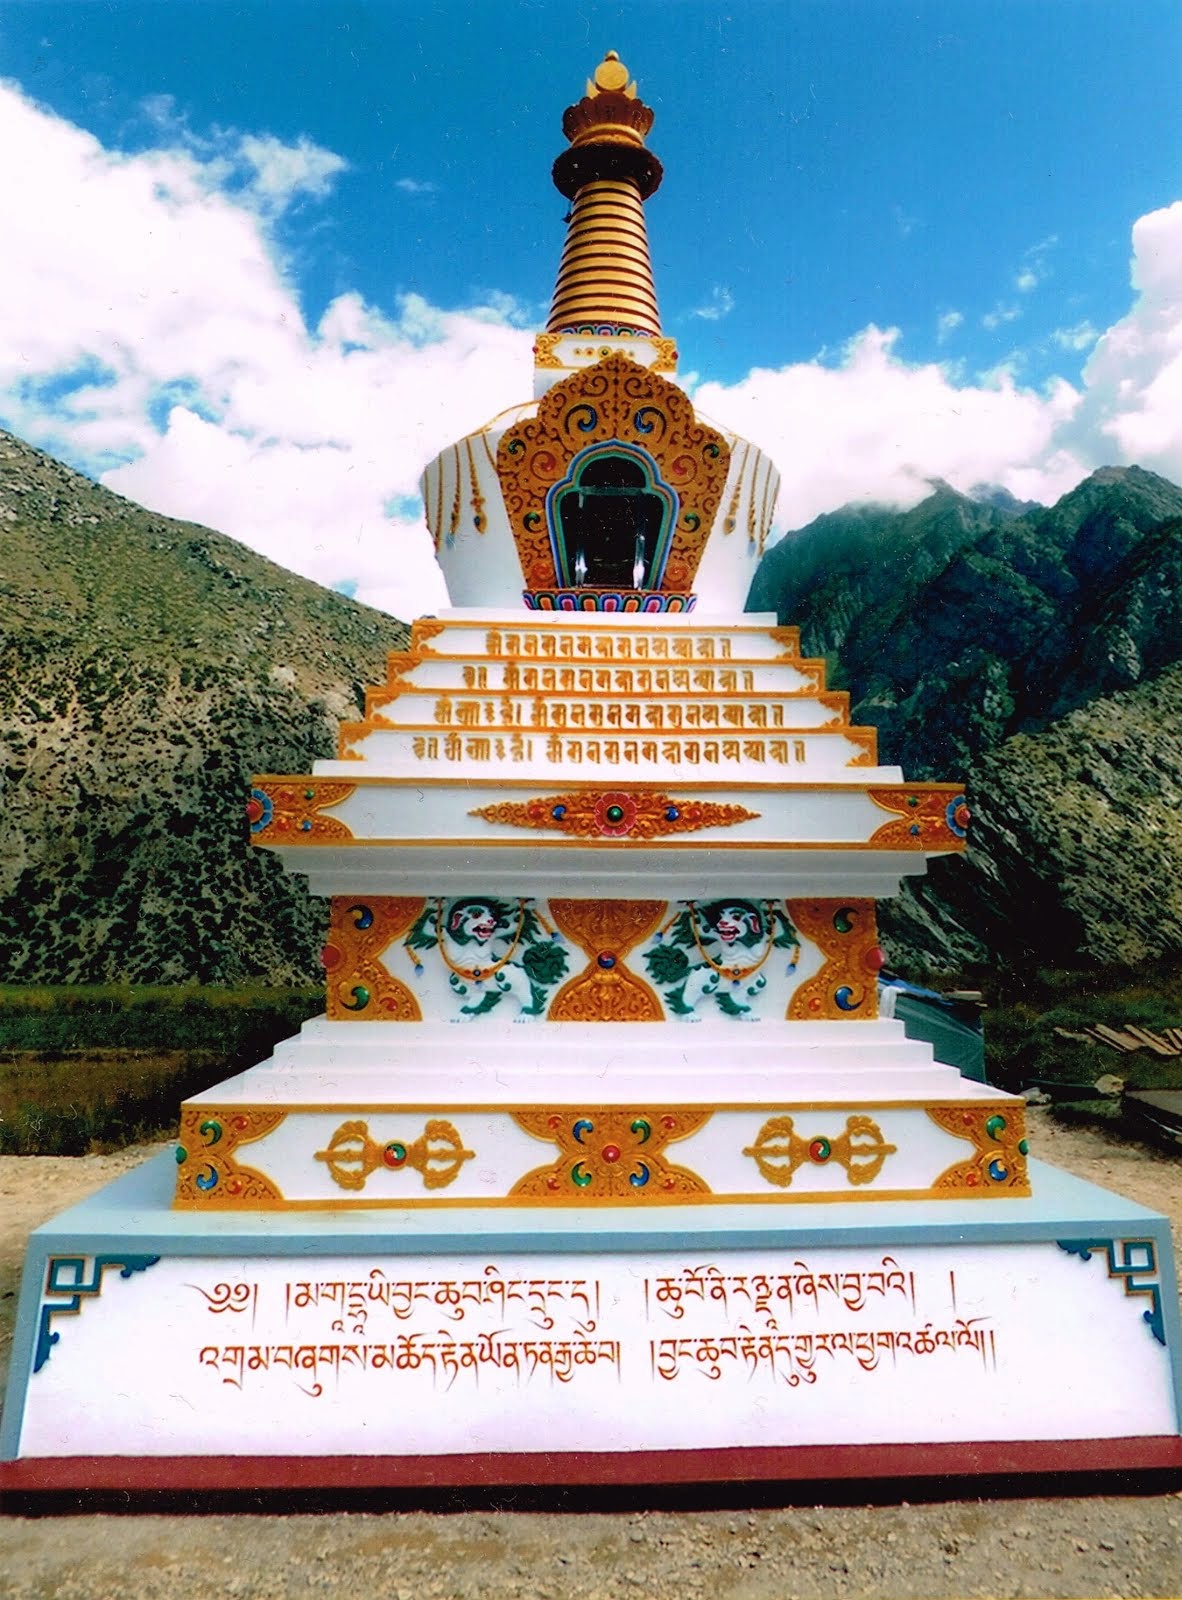 Latest updates on construction of Stupa